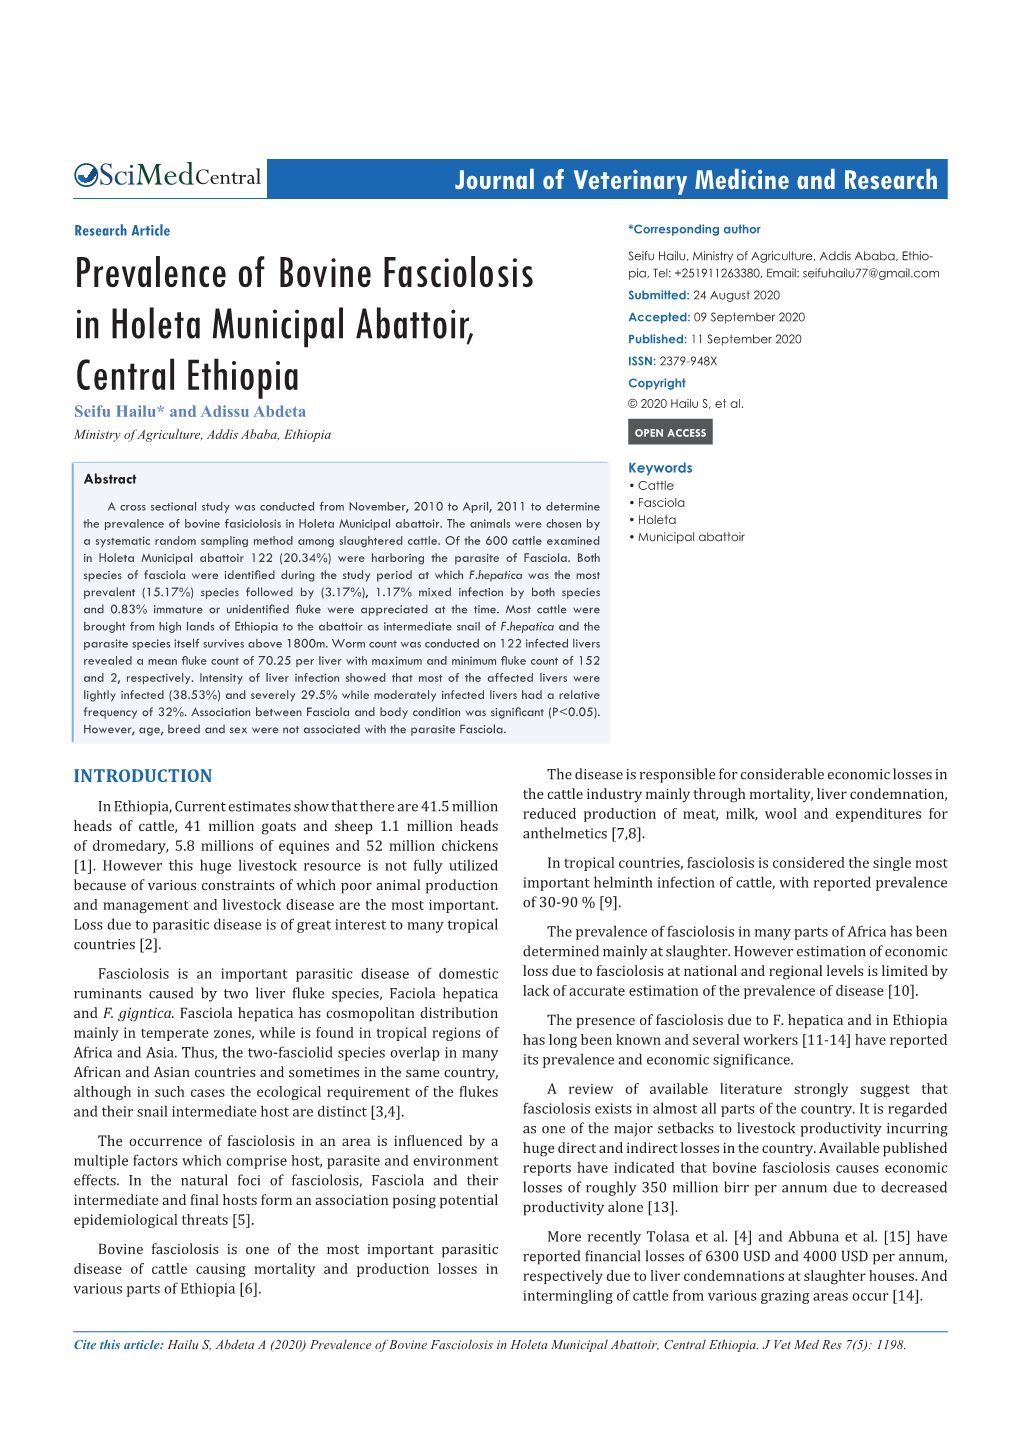 Prevalence of Bovine Fasciolosis in Holeta Municipal Abattoir, Central Ethiopia